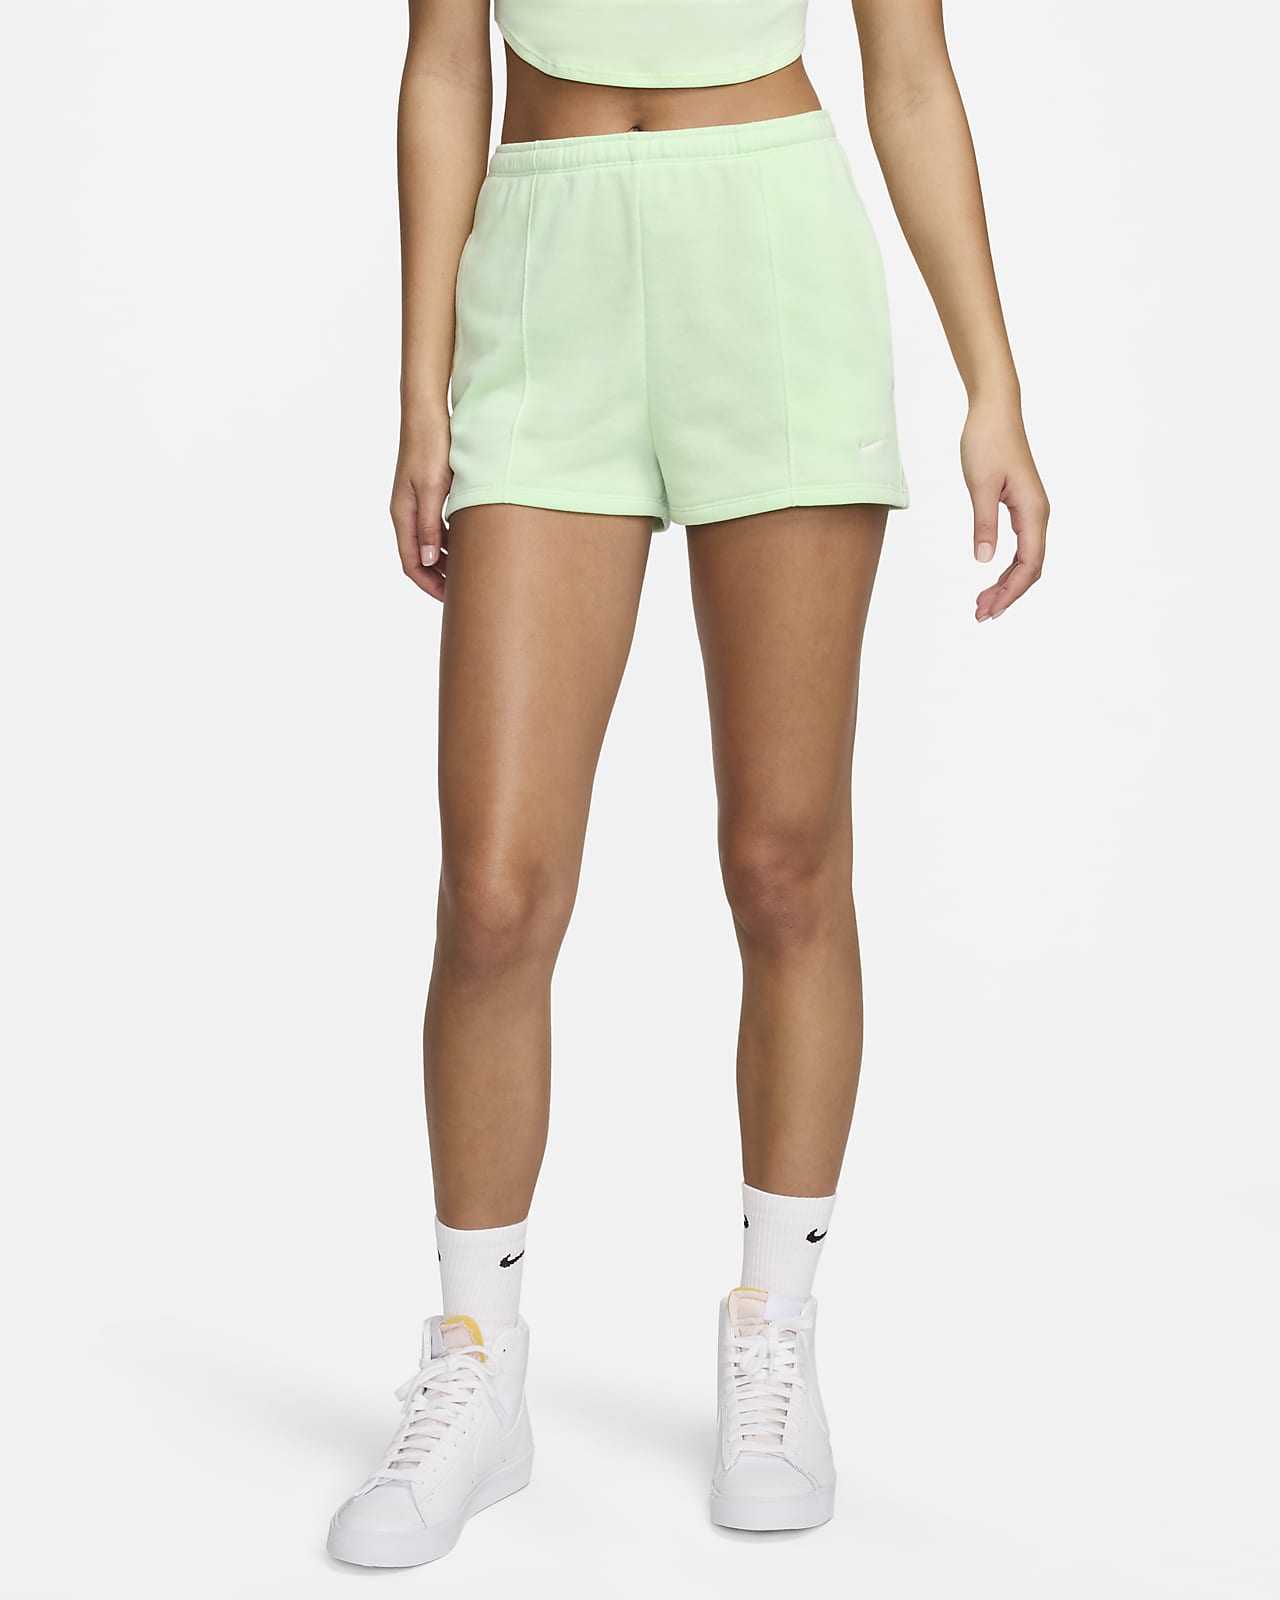 Nike Sportswear Chill Terry Pantalons curts de teixit French Terry de cintura alta i ajust entallat de 5 centímetres - Dona